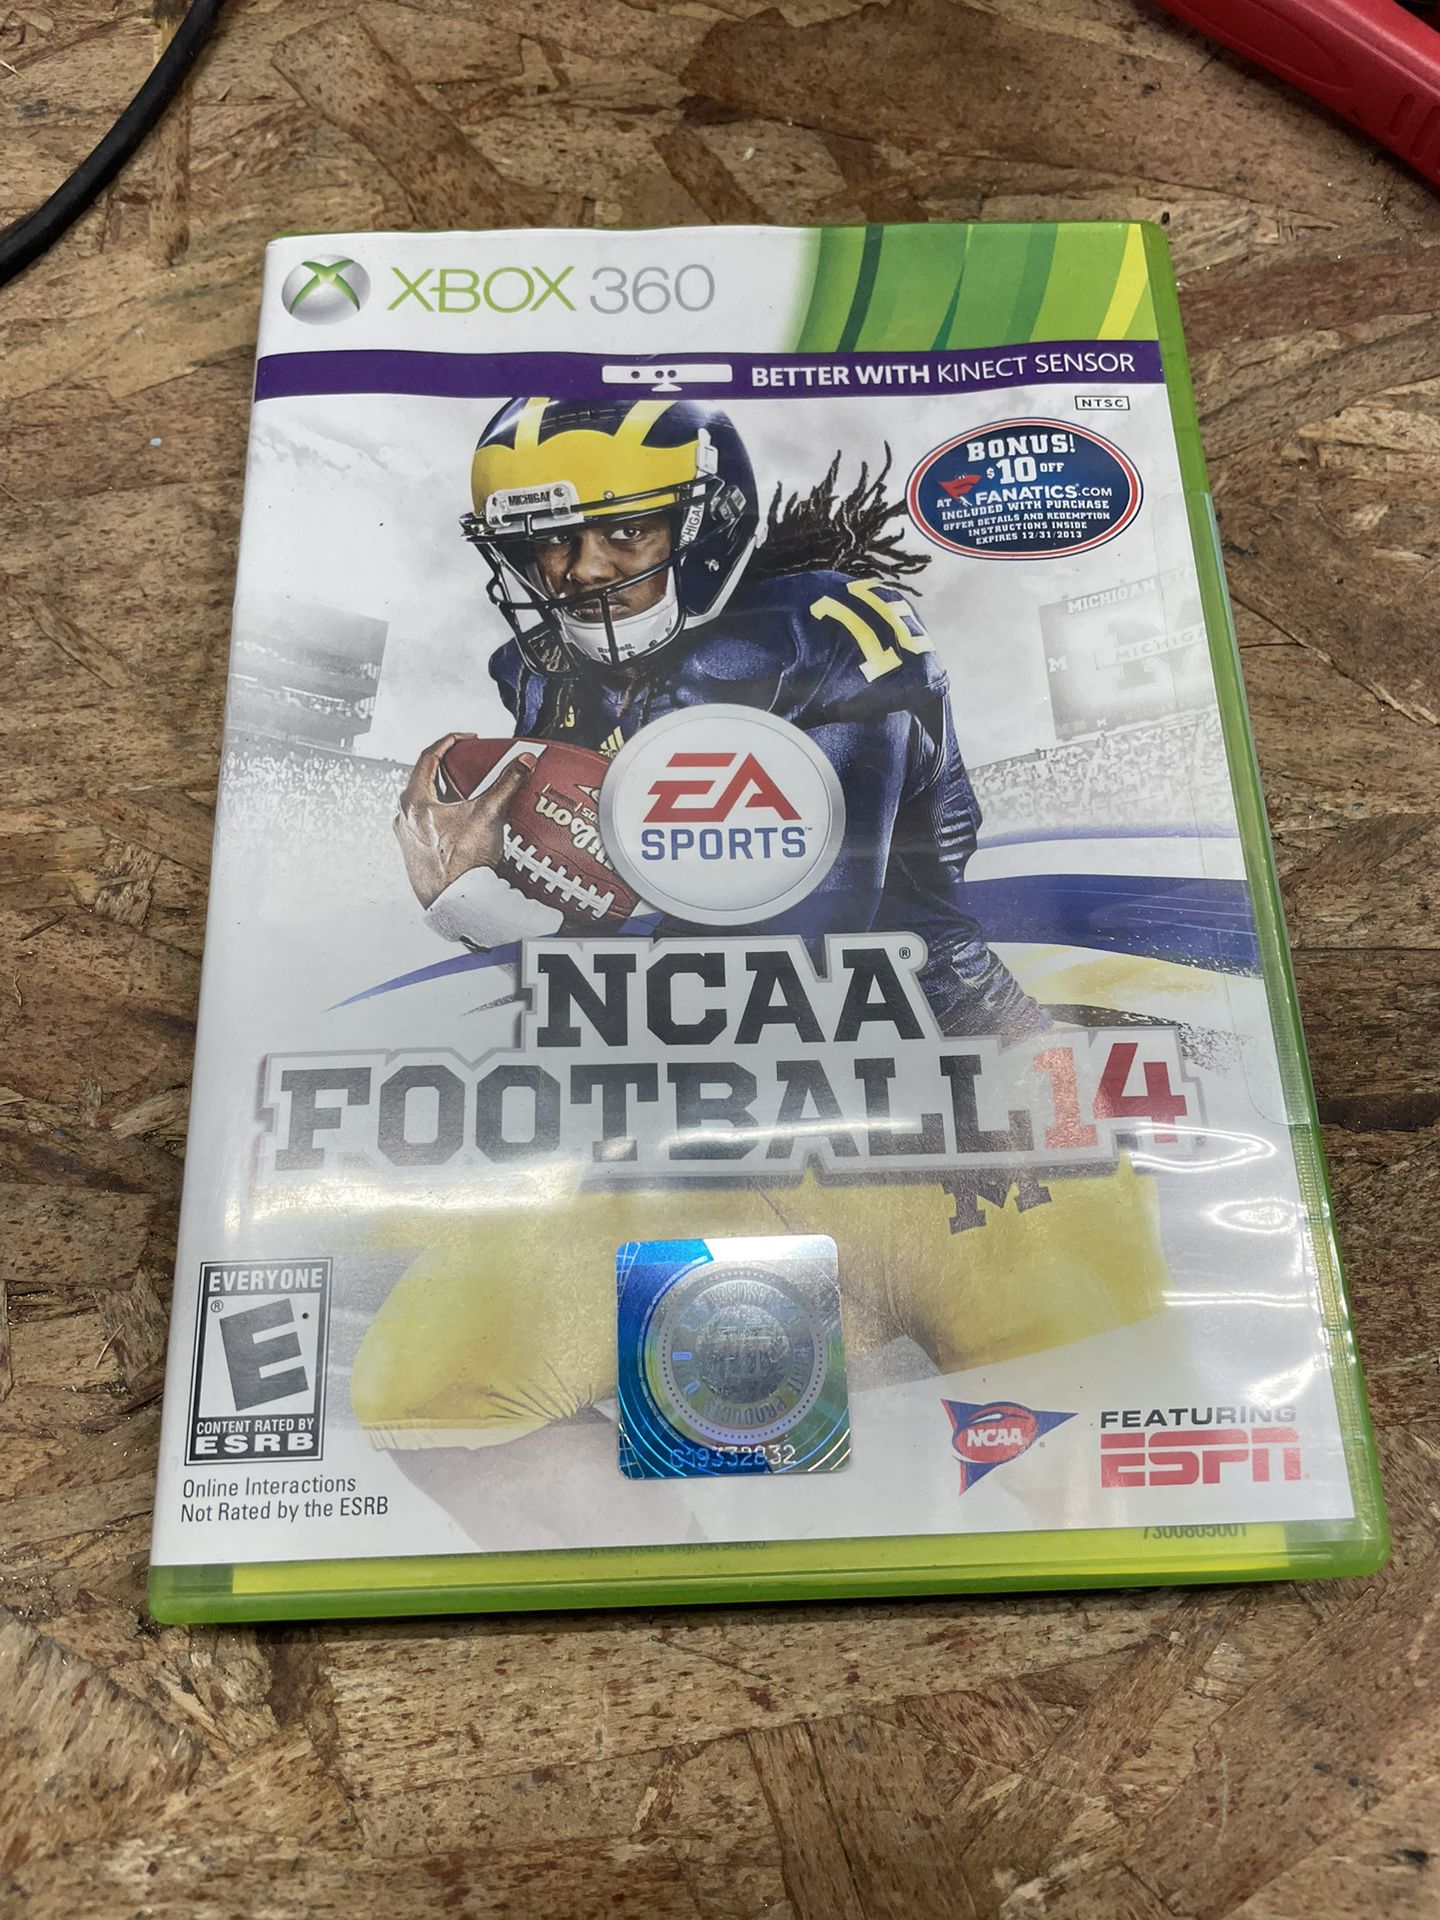 Xbox 360 NCAA Football Game 